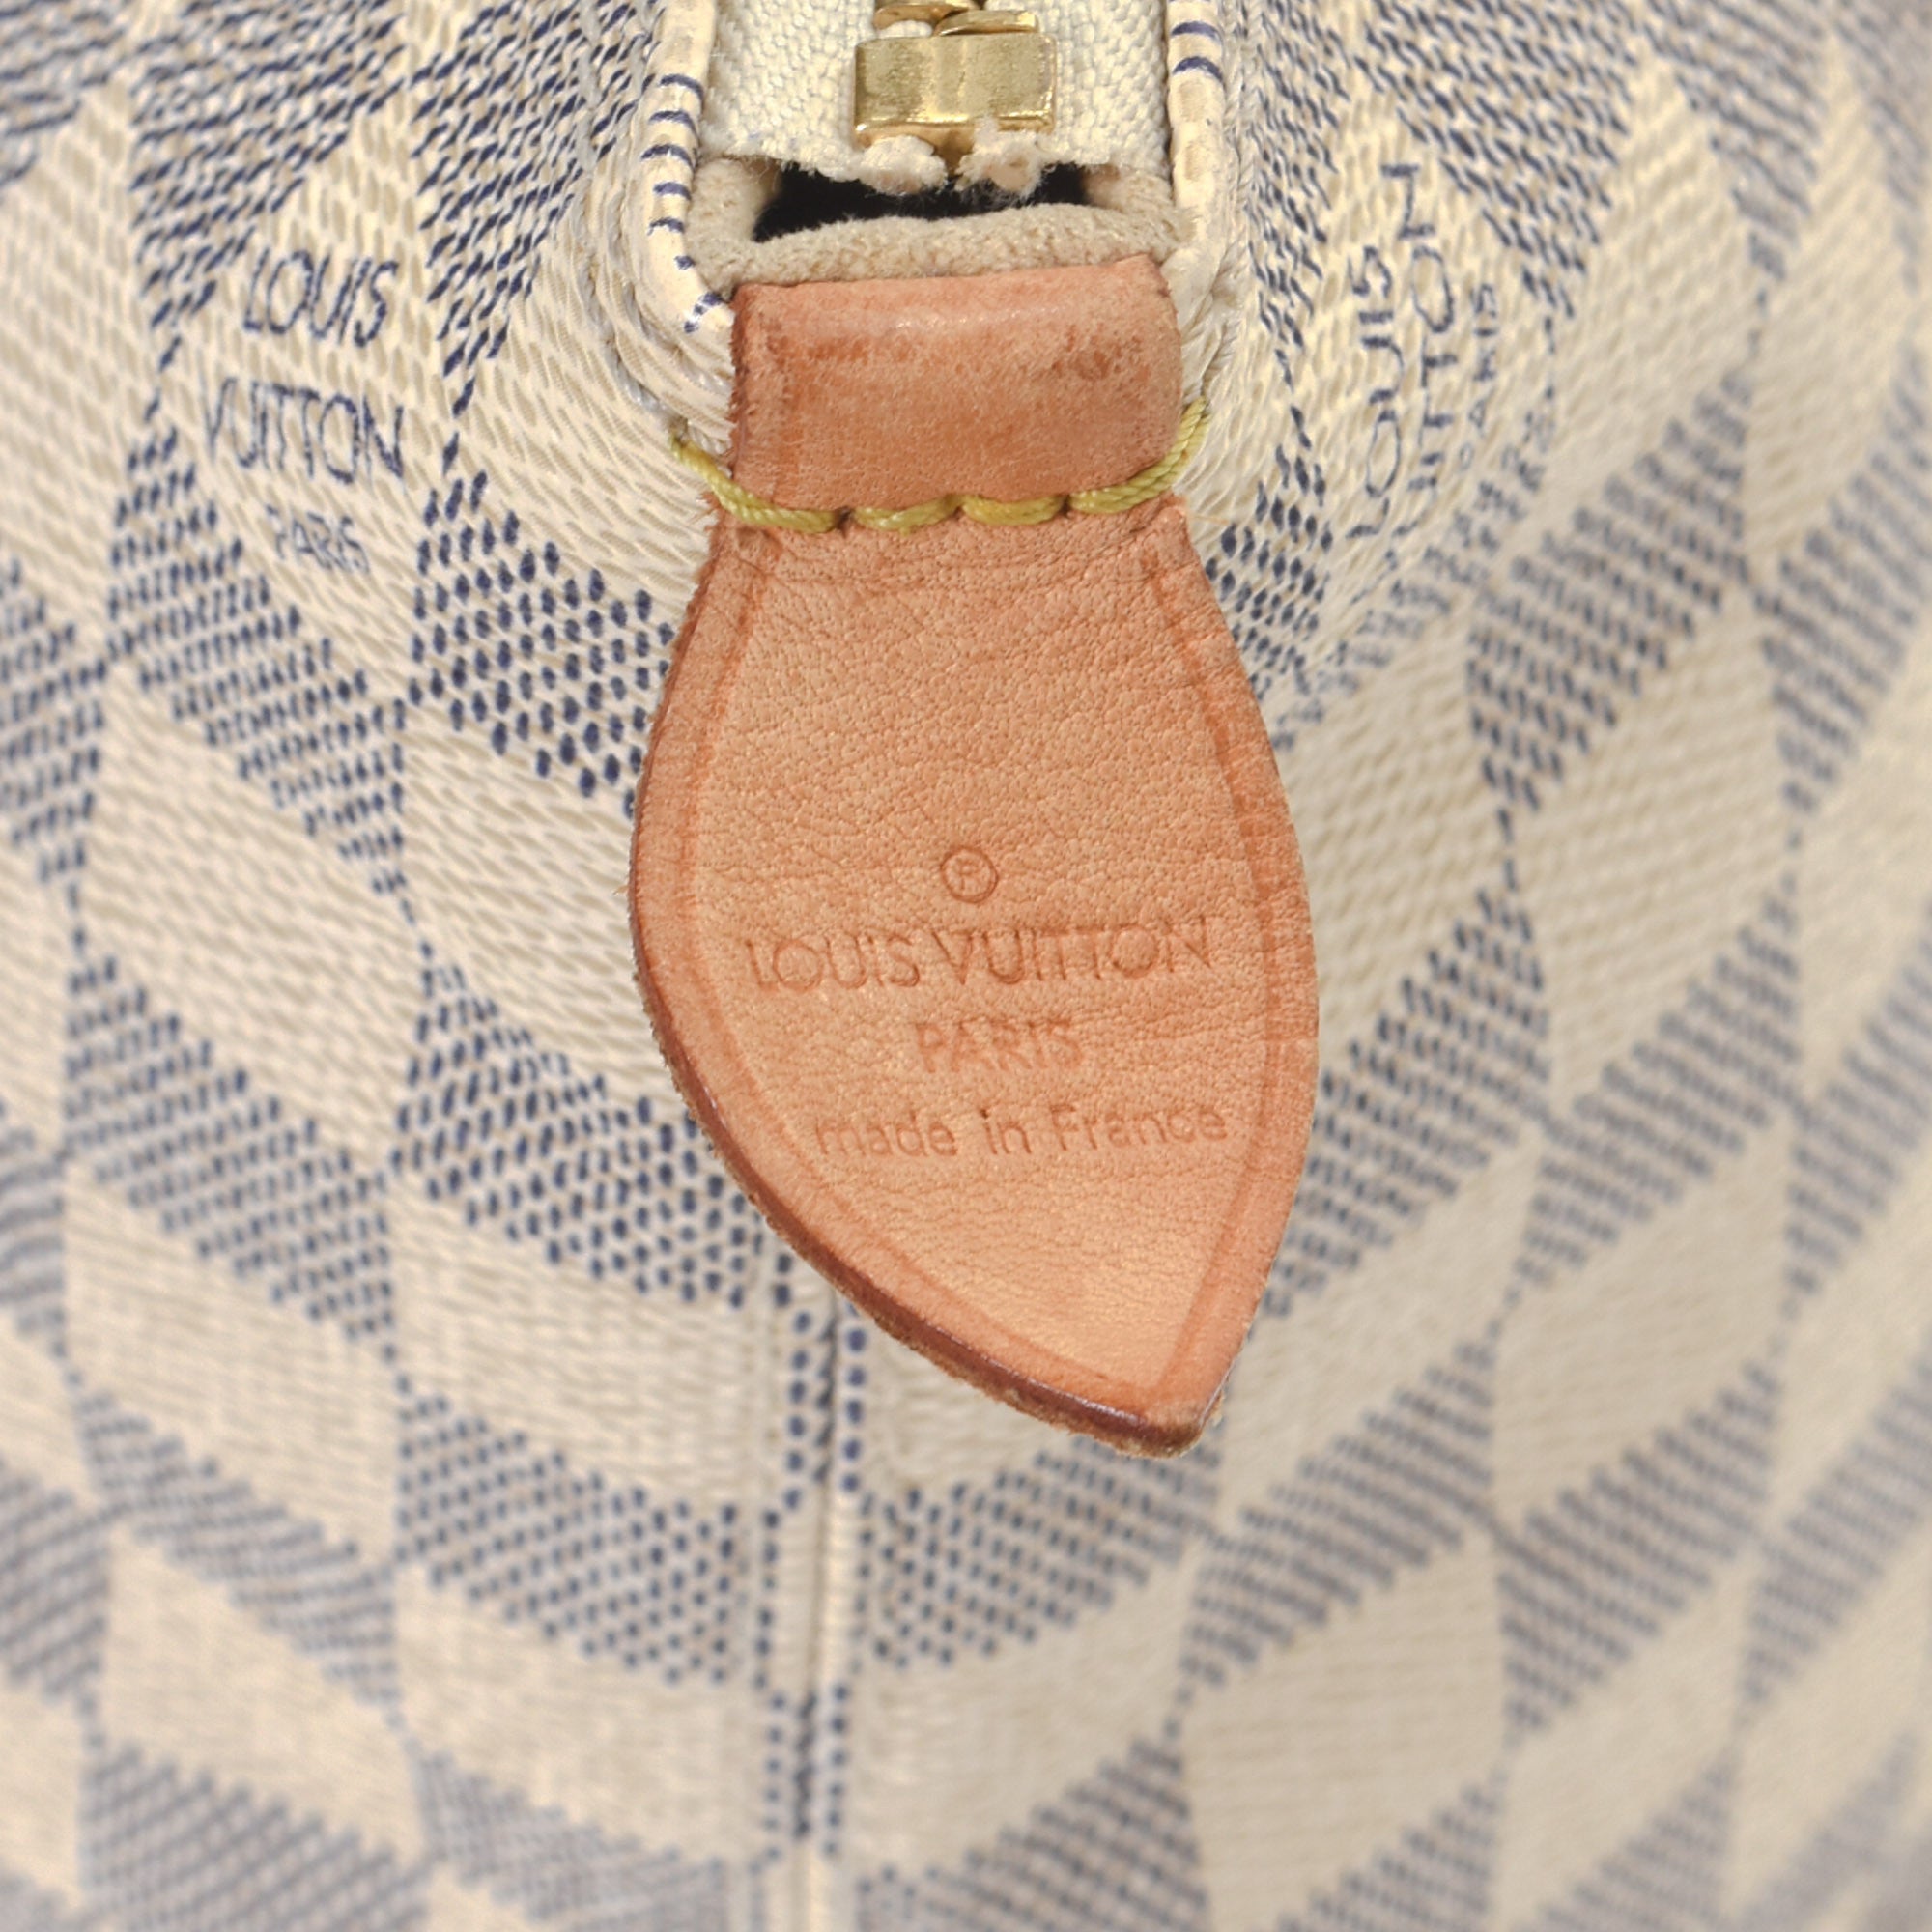 Louis Vuitton Saleya PM Tote Handbag